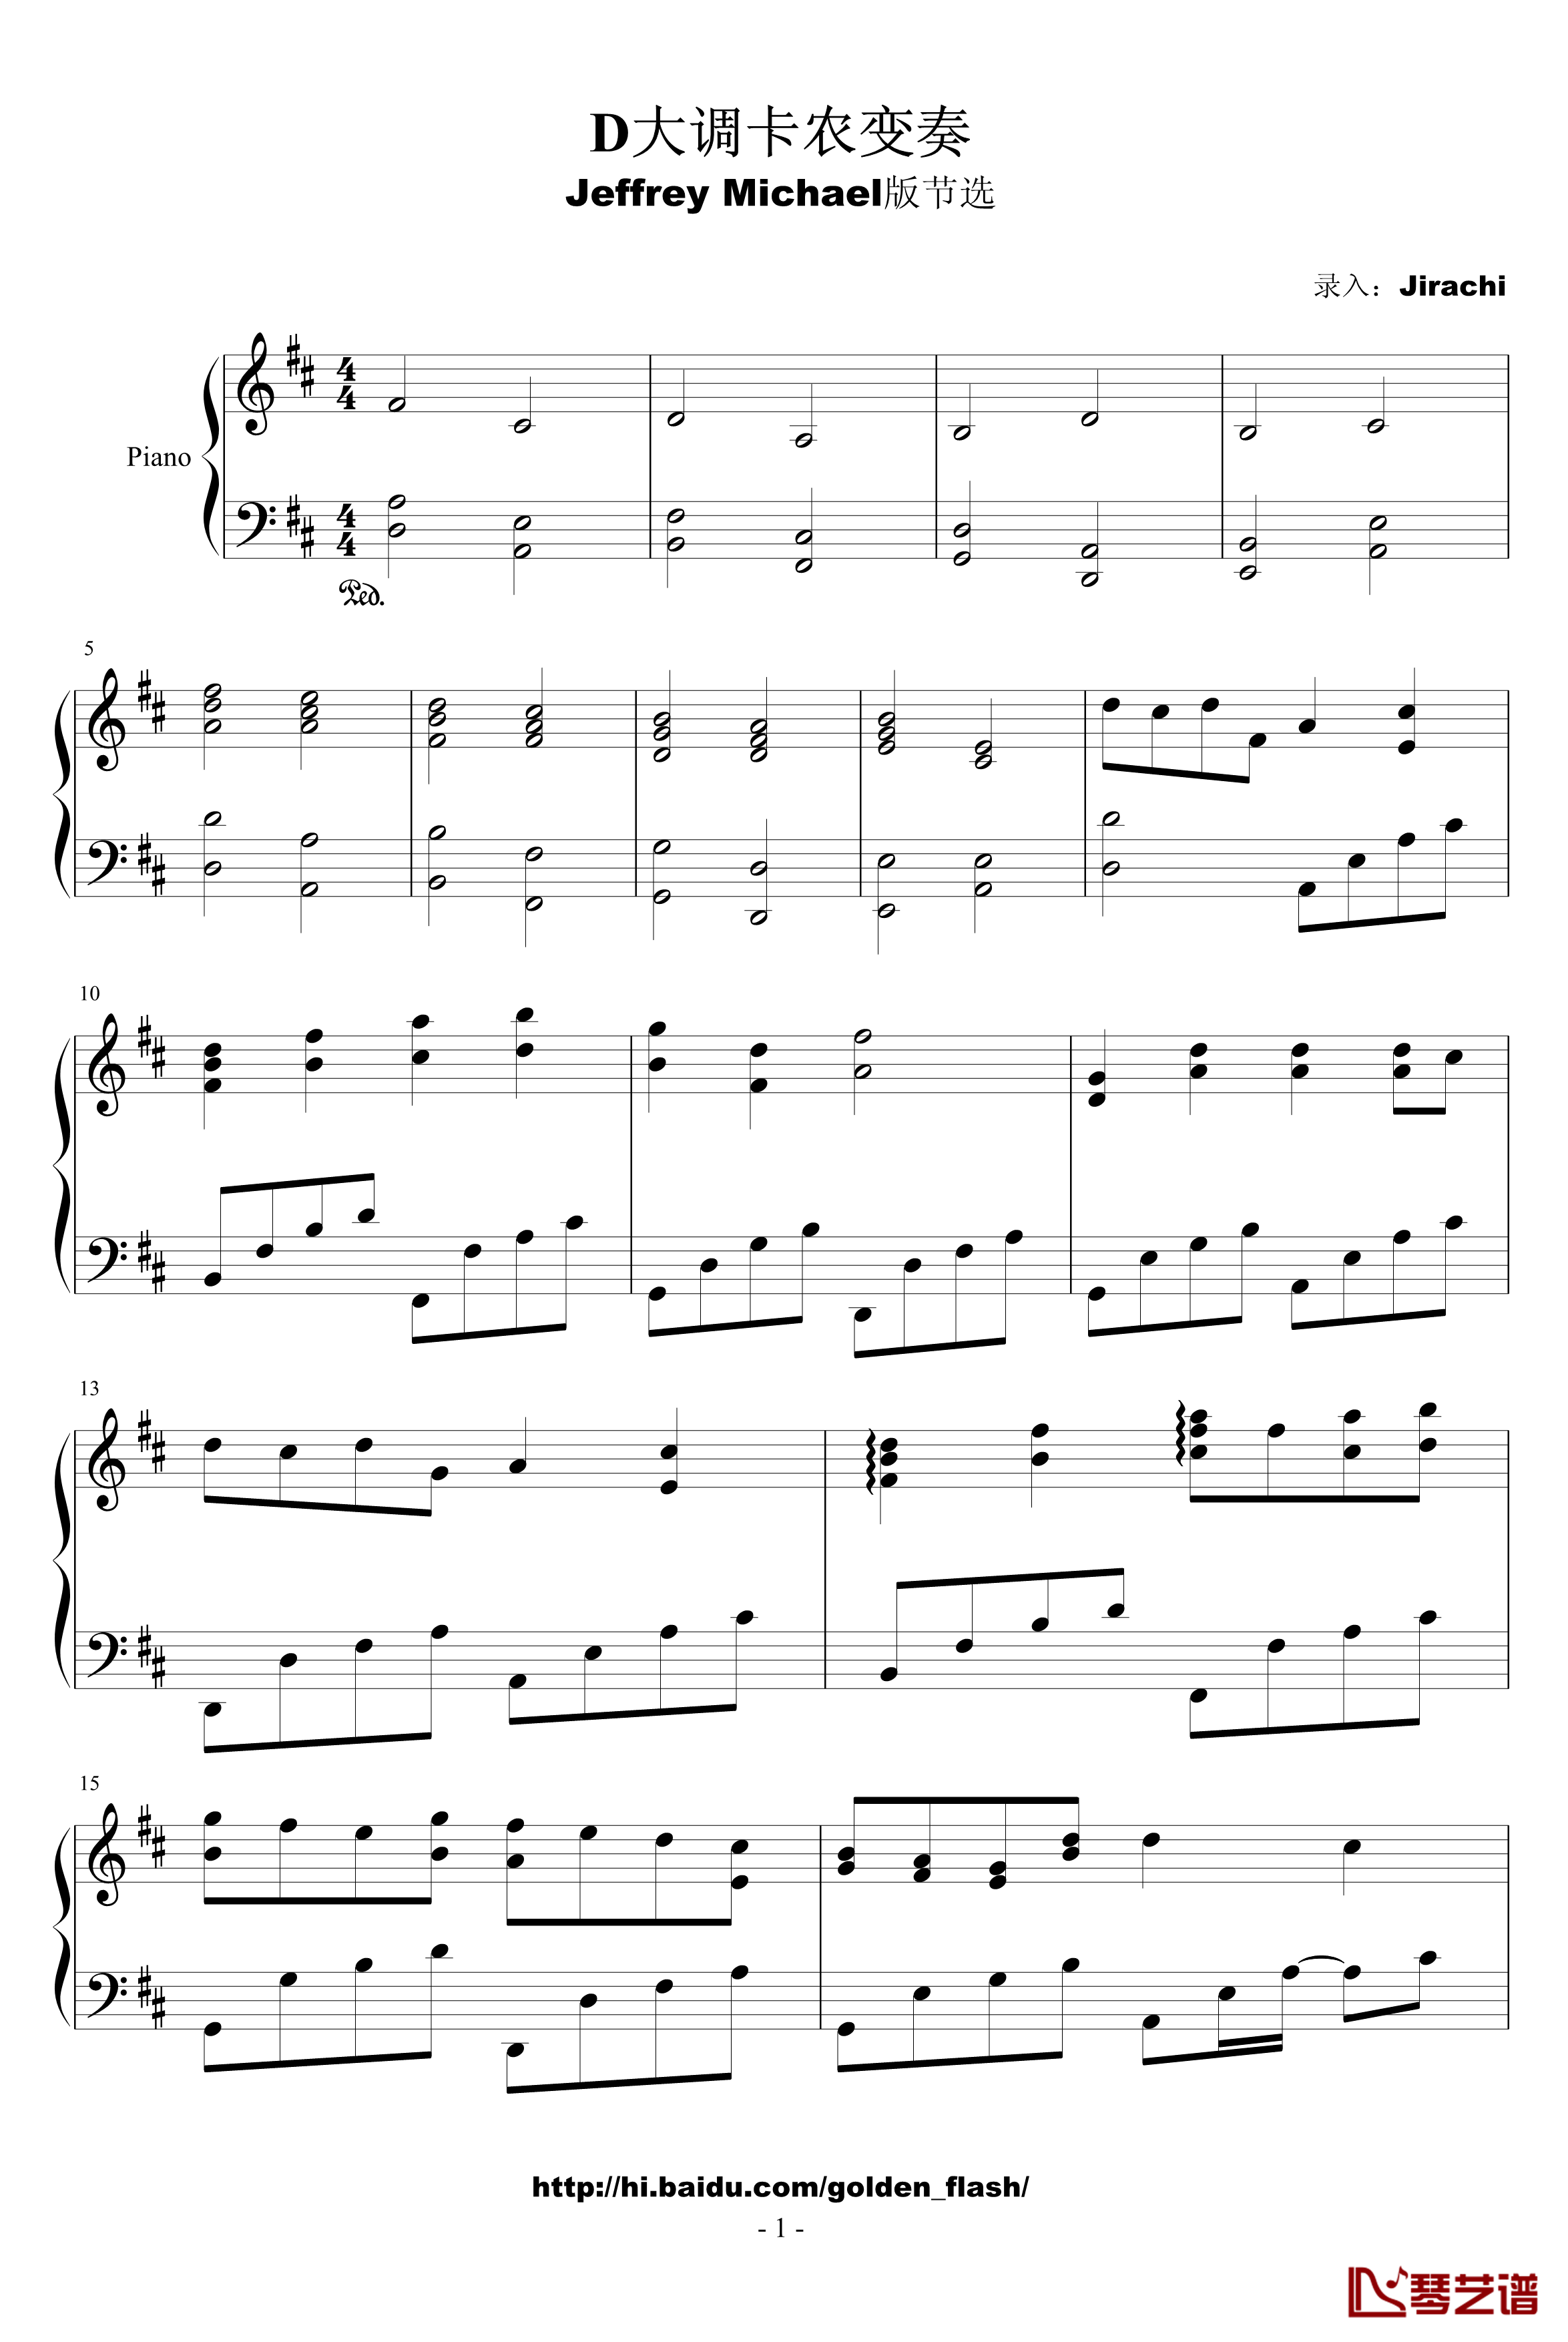 Jeffrey Michael版节选钢琴谱-D大调卡农-帕赫贝尔-Pachelbel1